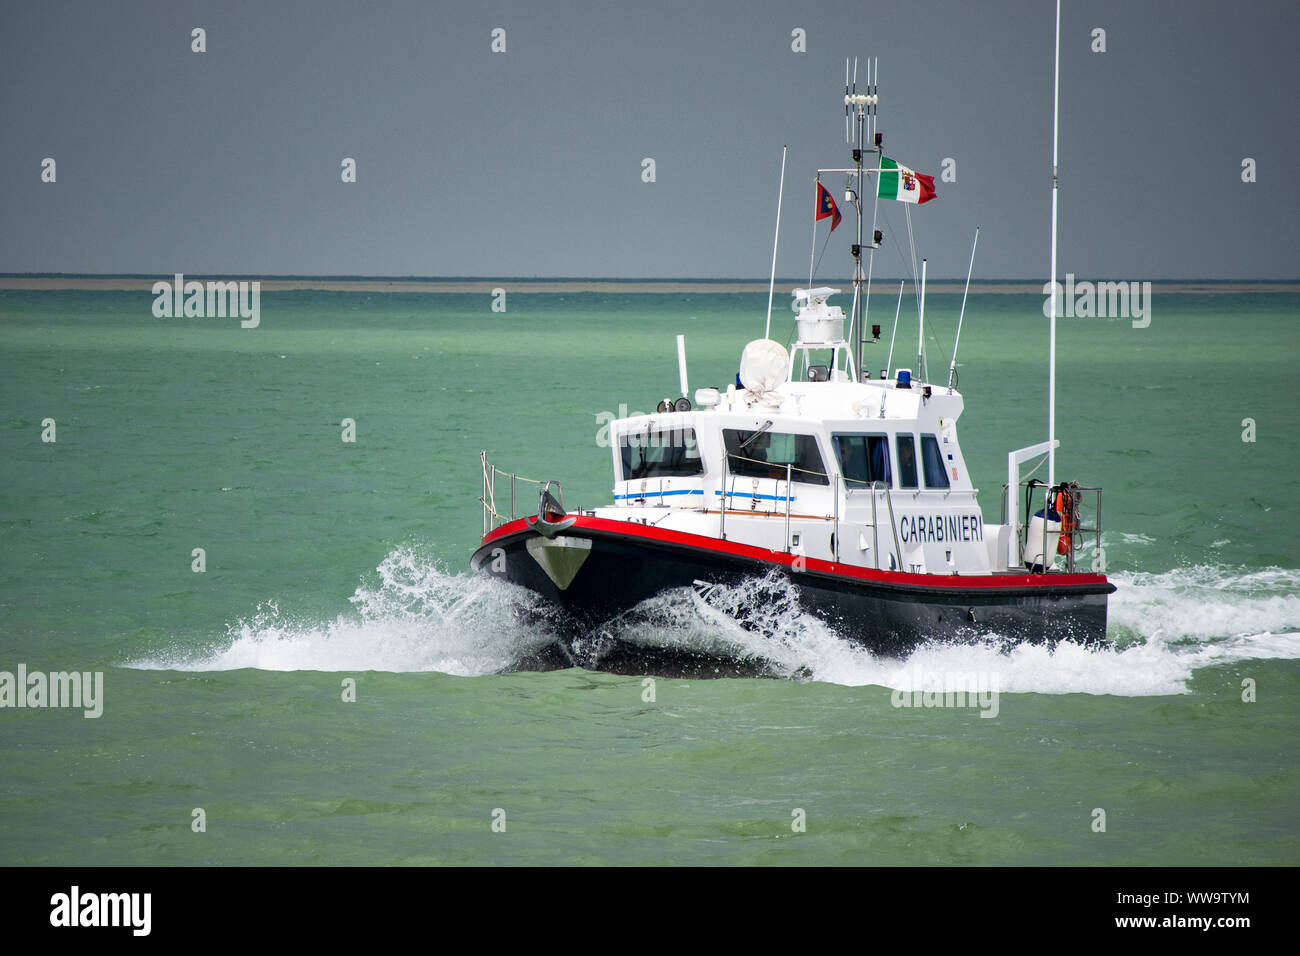 Italian Carabinieri maritime patrol motor boat. Carabinieri is Italian Gendarmerie Corp with jurisdiction in civil law enforcement. Stock Photo